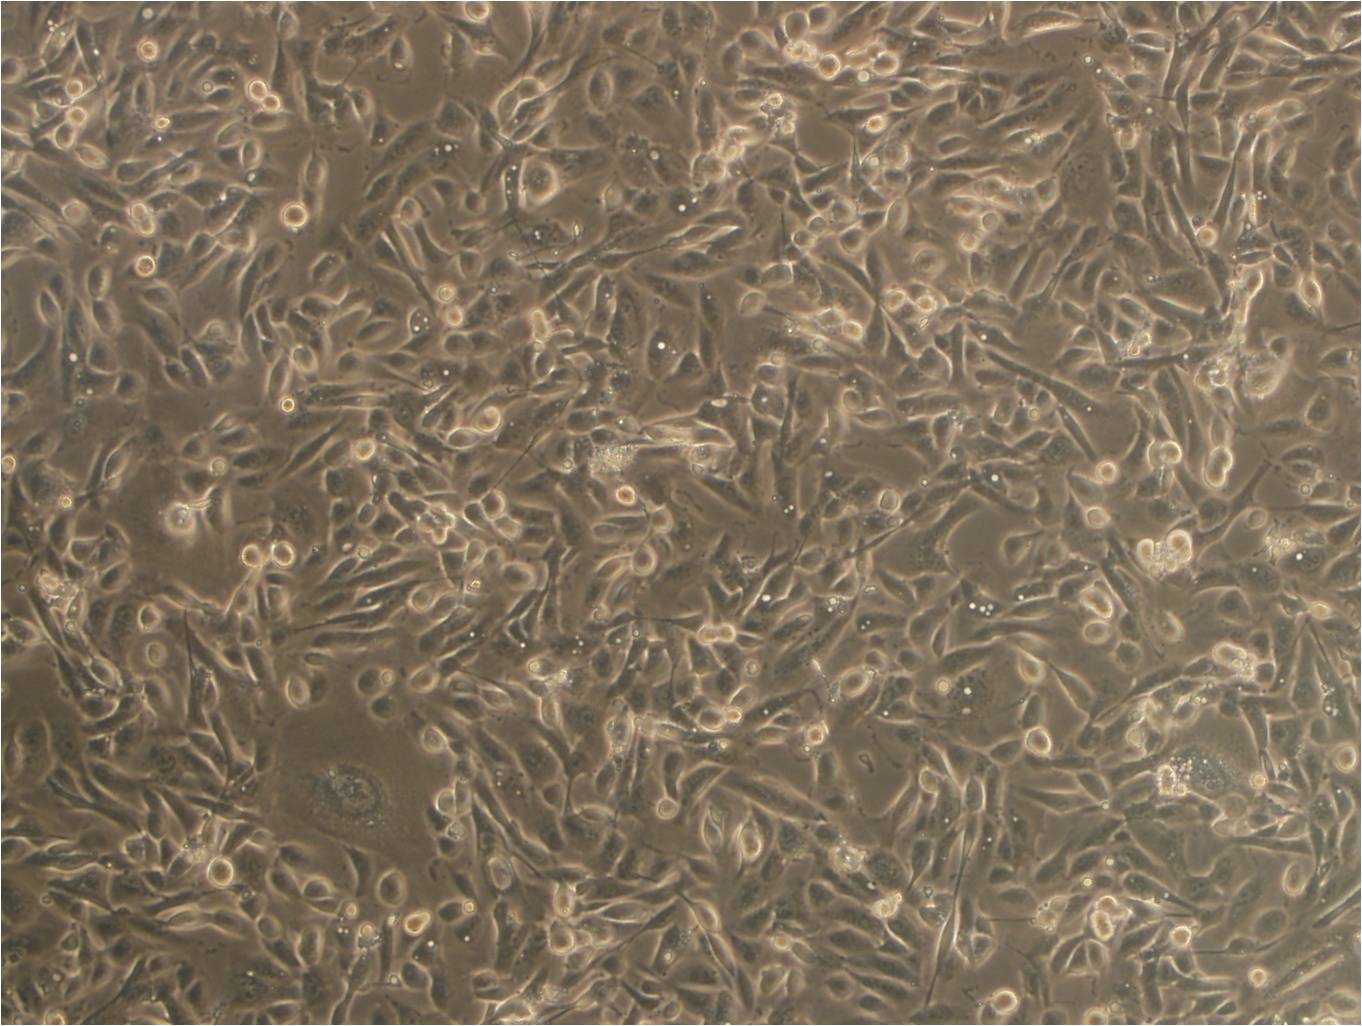 ESC-410 Cells(赠送Str鉴定报告)|人食管癌细胞